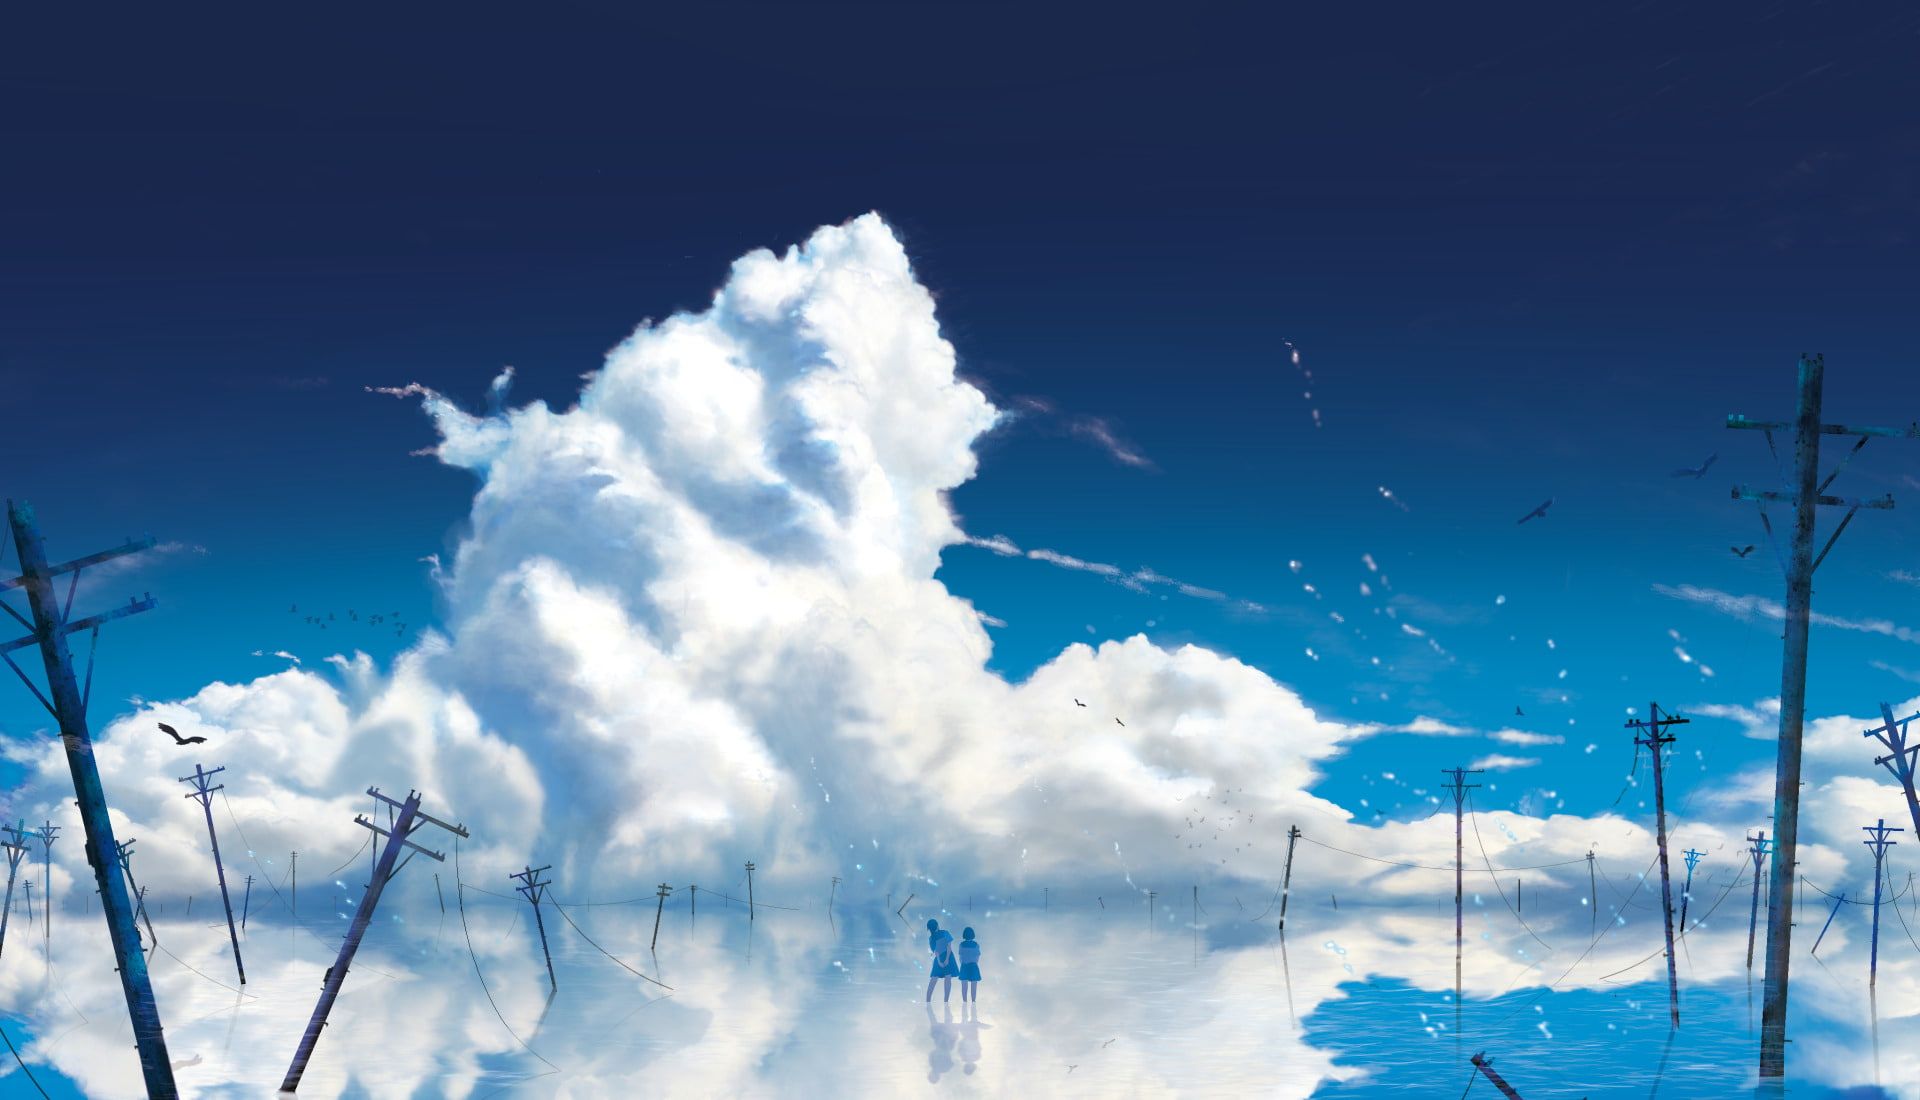 Beautiful Cloudy Sky AnimeWallpapers